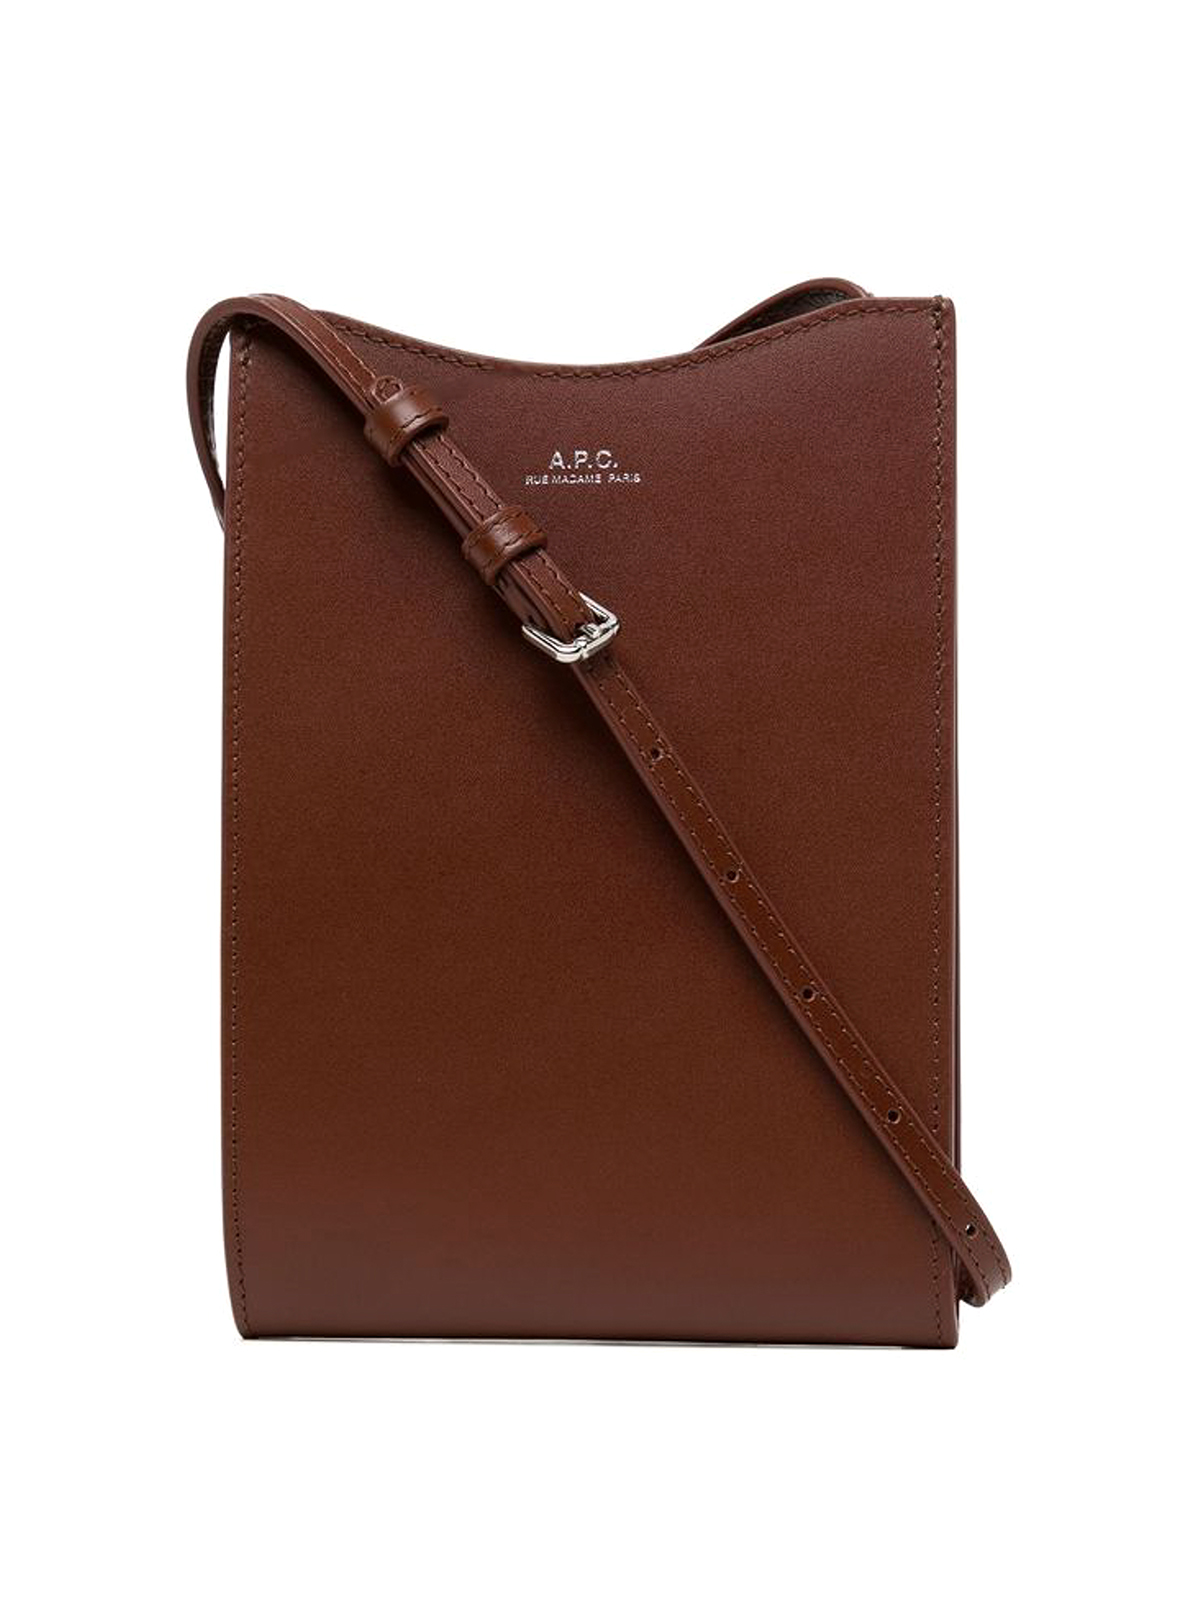 Apc Jamie Noisette Leather Bag In Brown